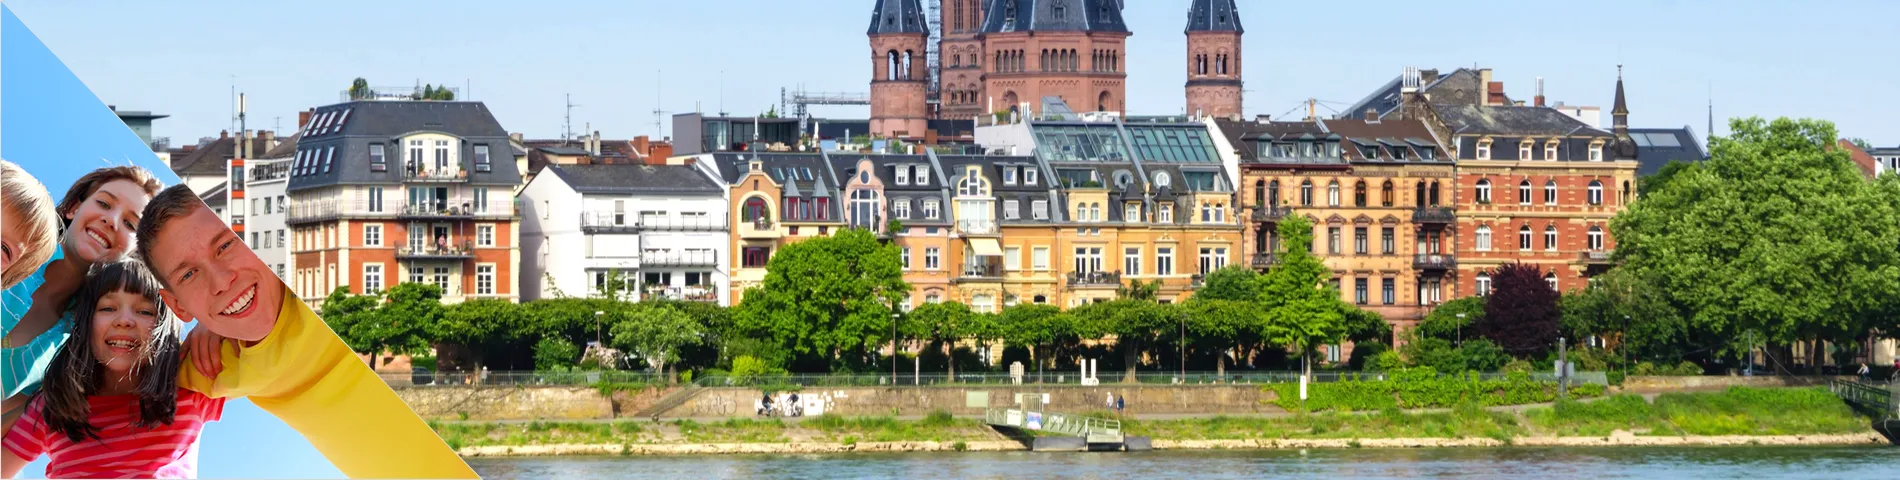 Mainz - 